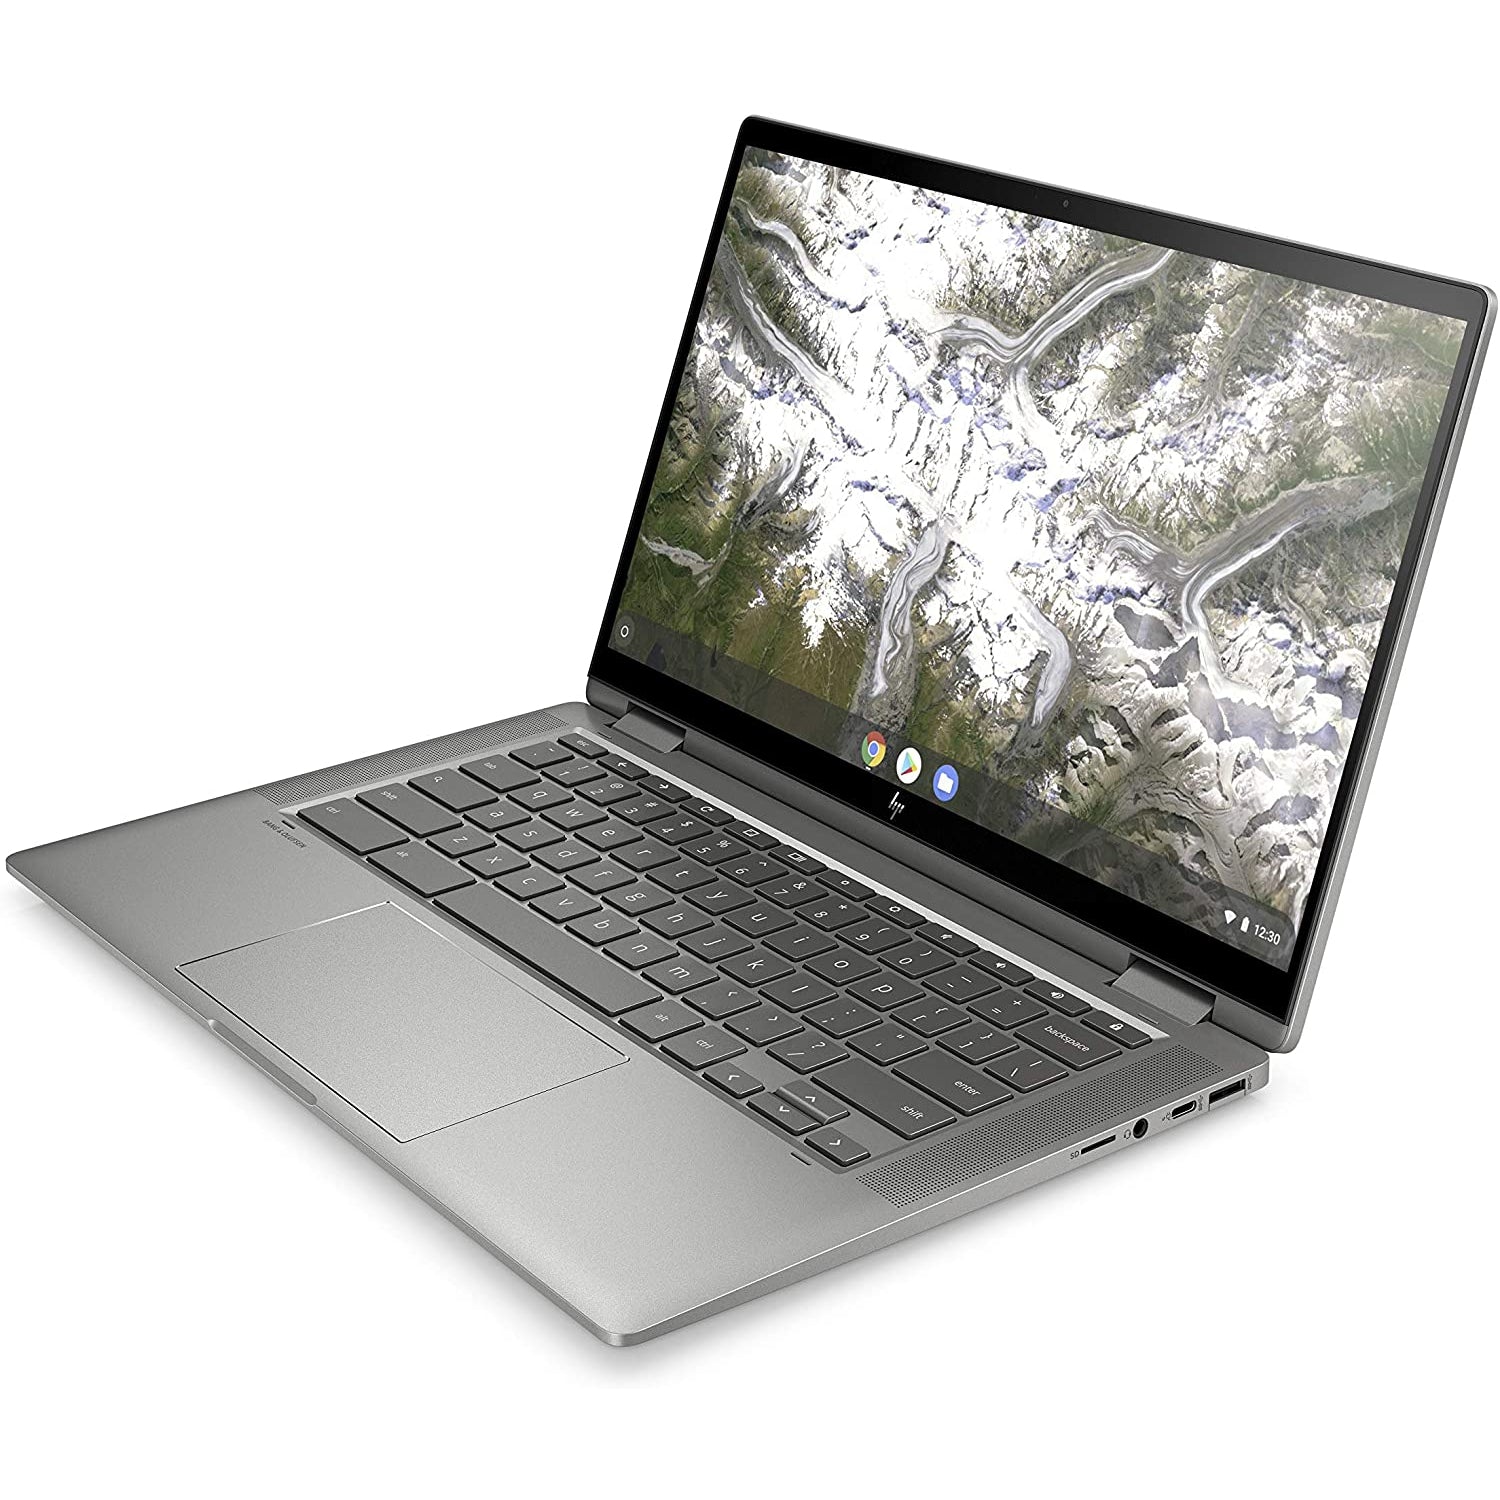 HP x360 14c-ca0003na Chromebook Laptop, Intel Pentium Processor, 4GB RAM, 64GB eMMC, 14" Full HD, Silver